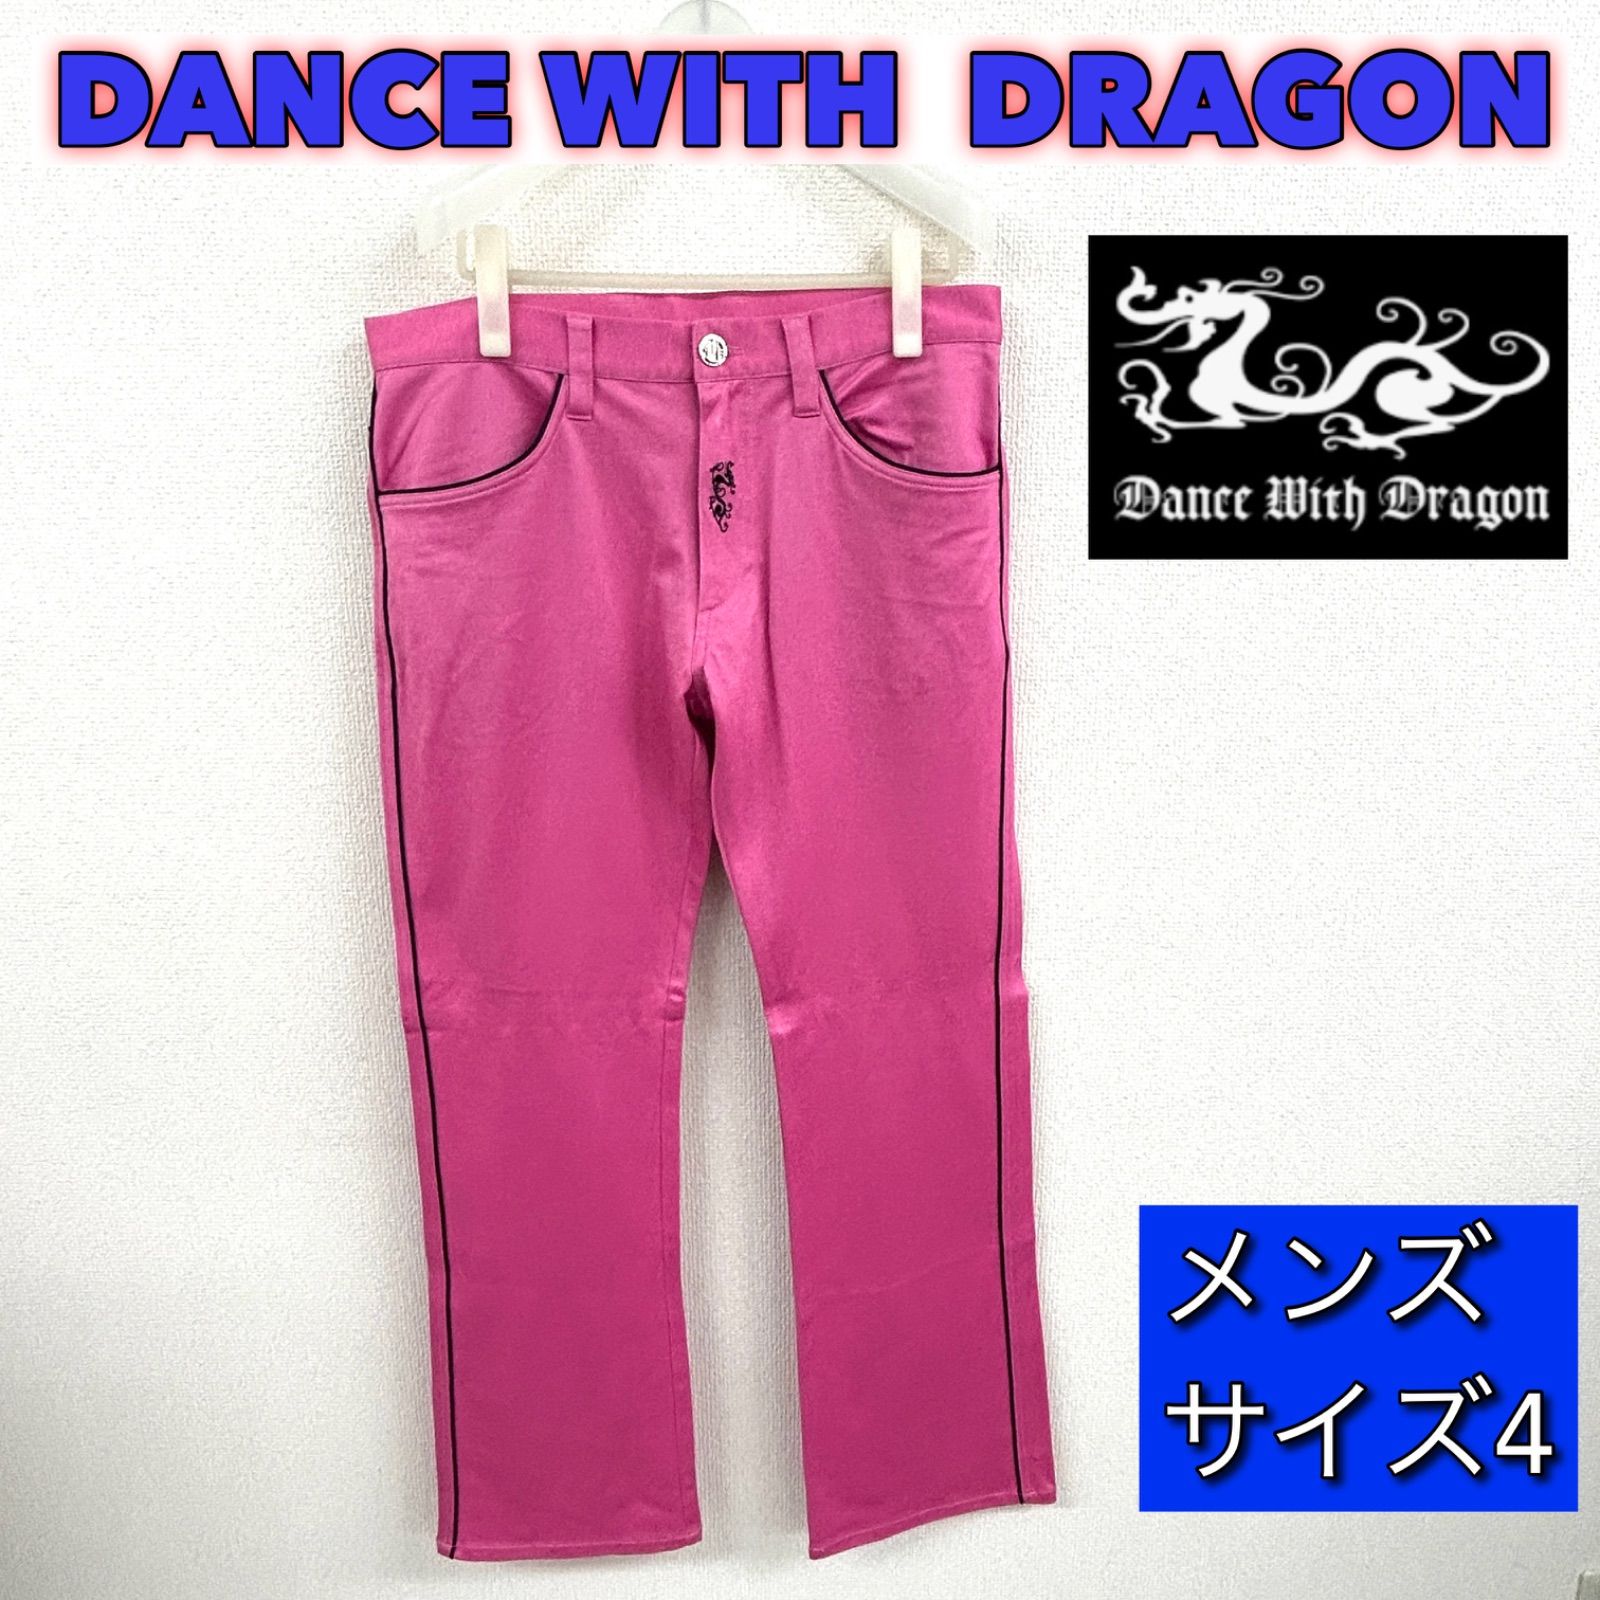 dance with dragon メンズズボン-